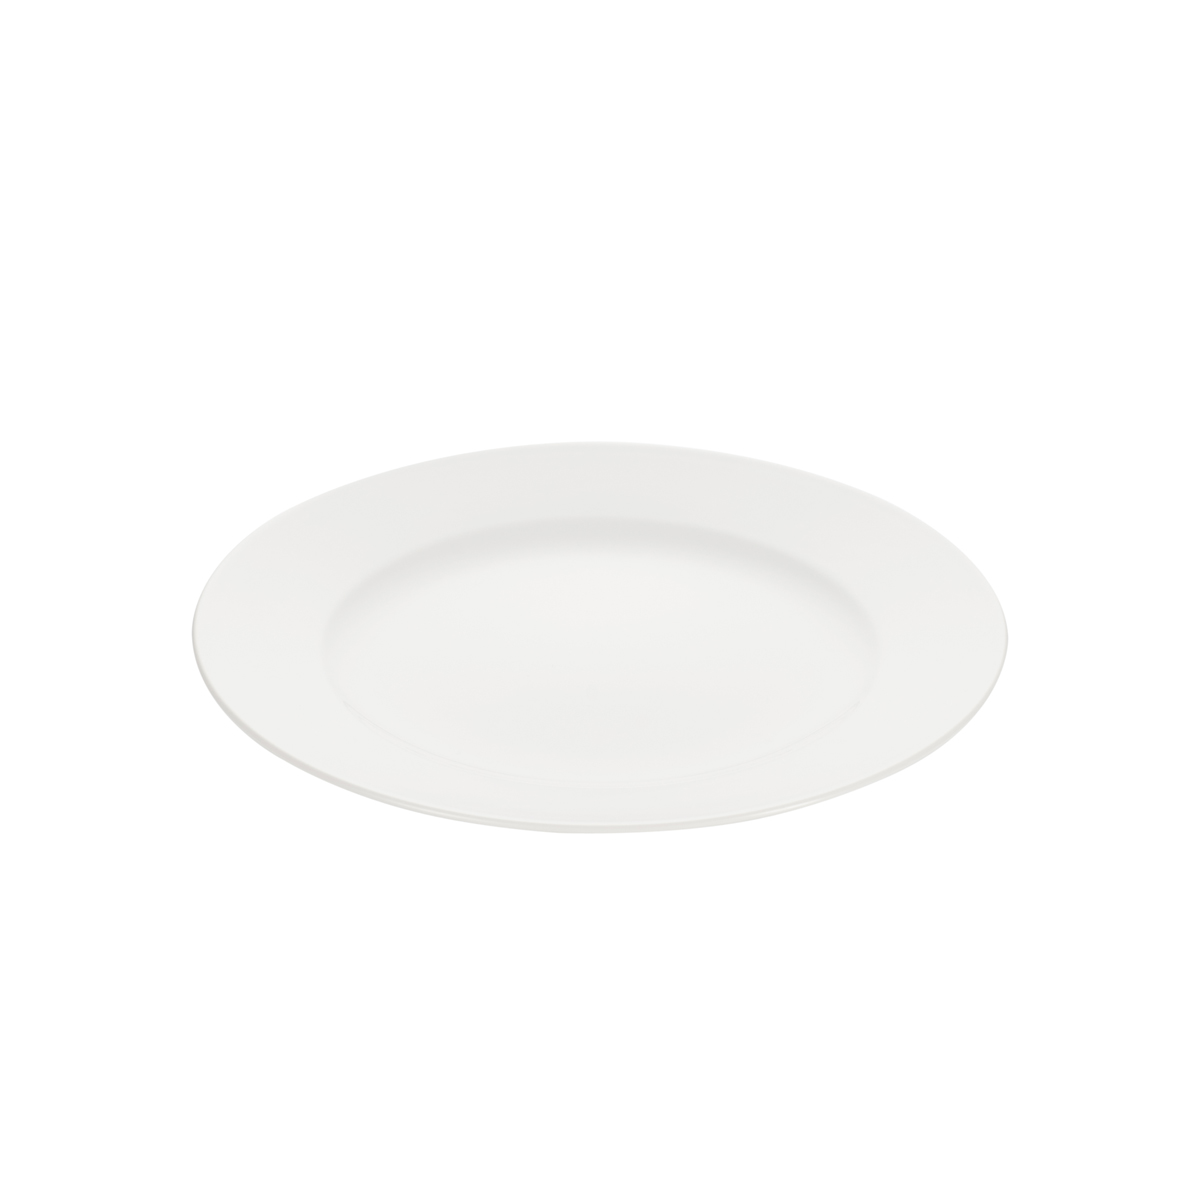 Плоская тарелка Gipfel Classique 50907 30 см плоская тарелка gipfel classique 50906 27 см